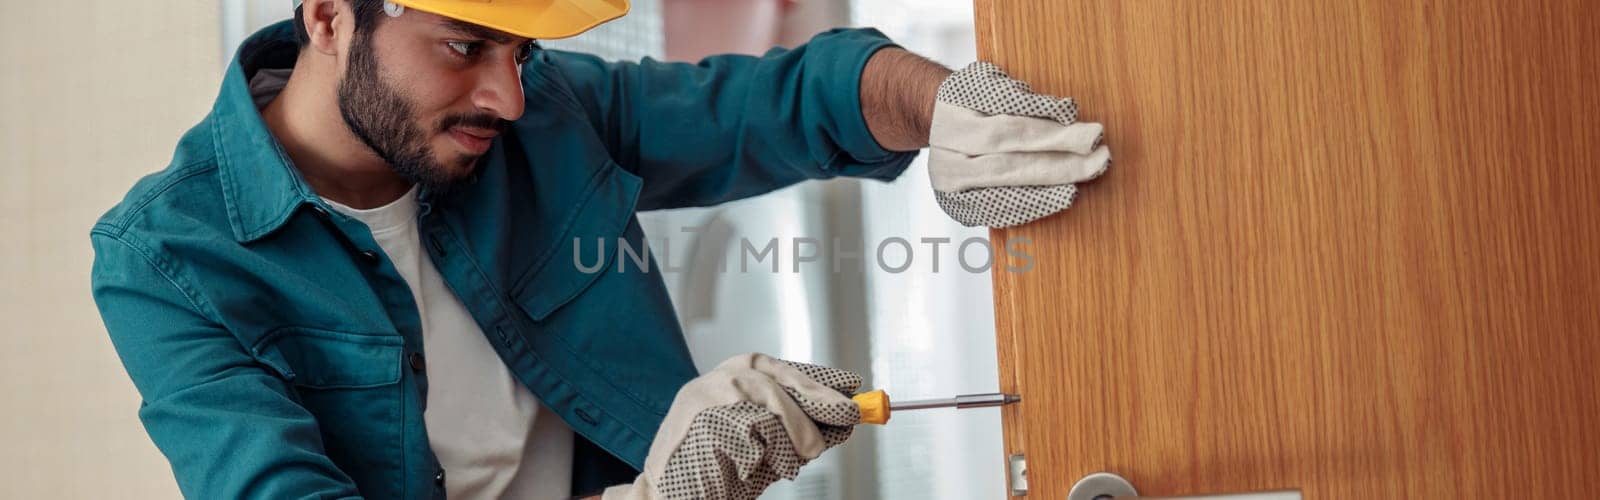 Locksmith workman in uniform installing door knob. Professional repair service by Yaroslav_astakhov